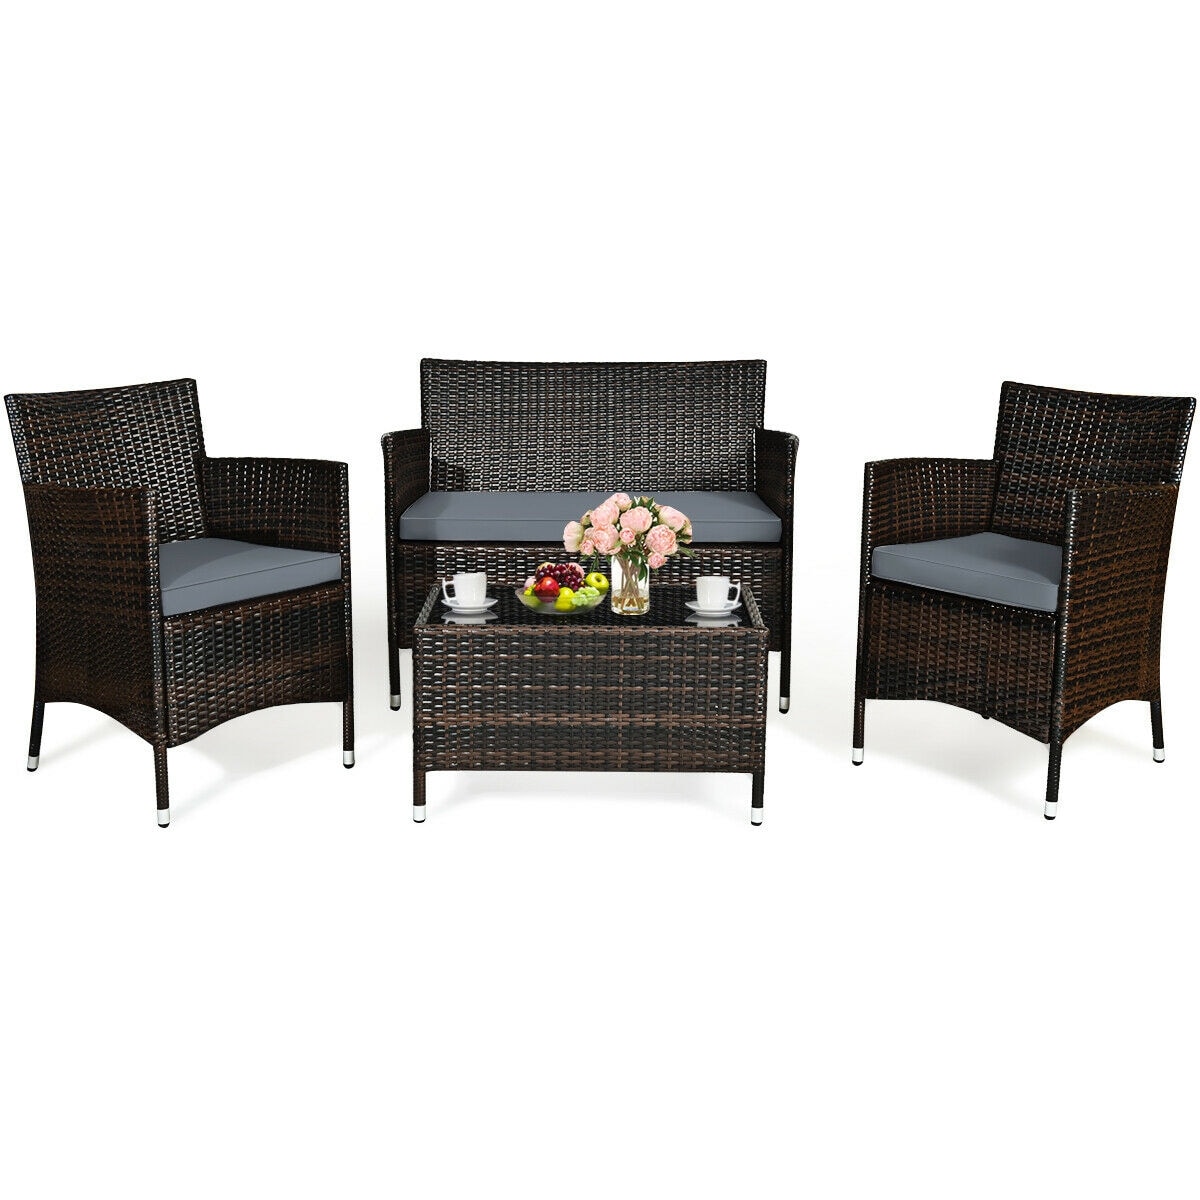 Rattan Patio Furniture 4 Piece Set Conversation Sets Chair Outdoor Sofa Table 